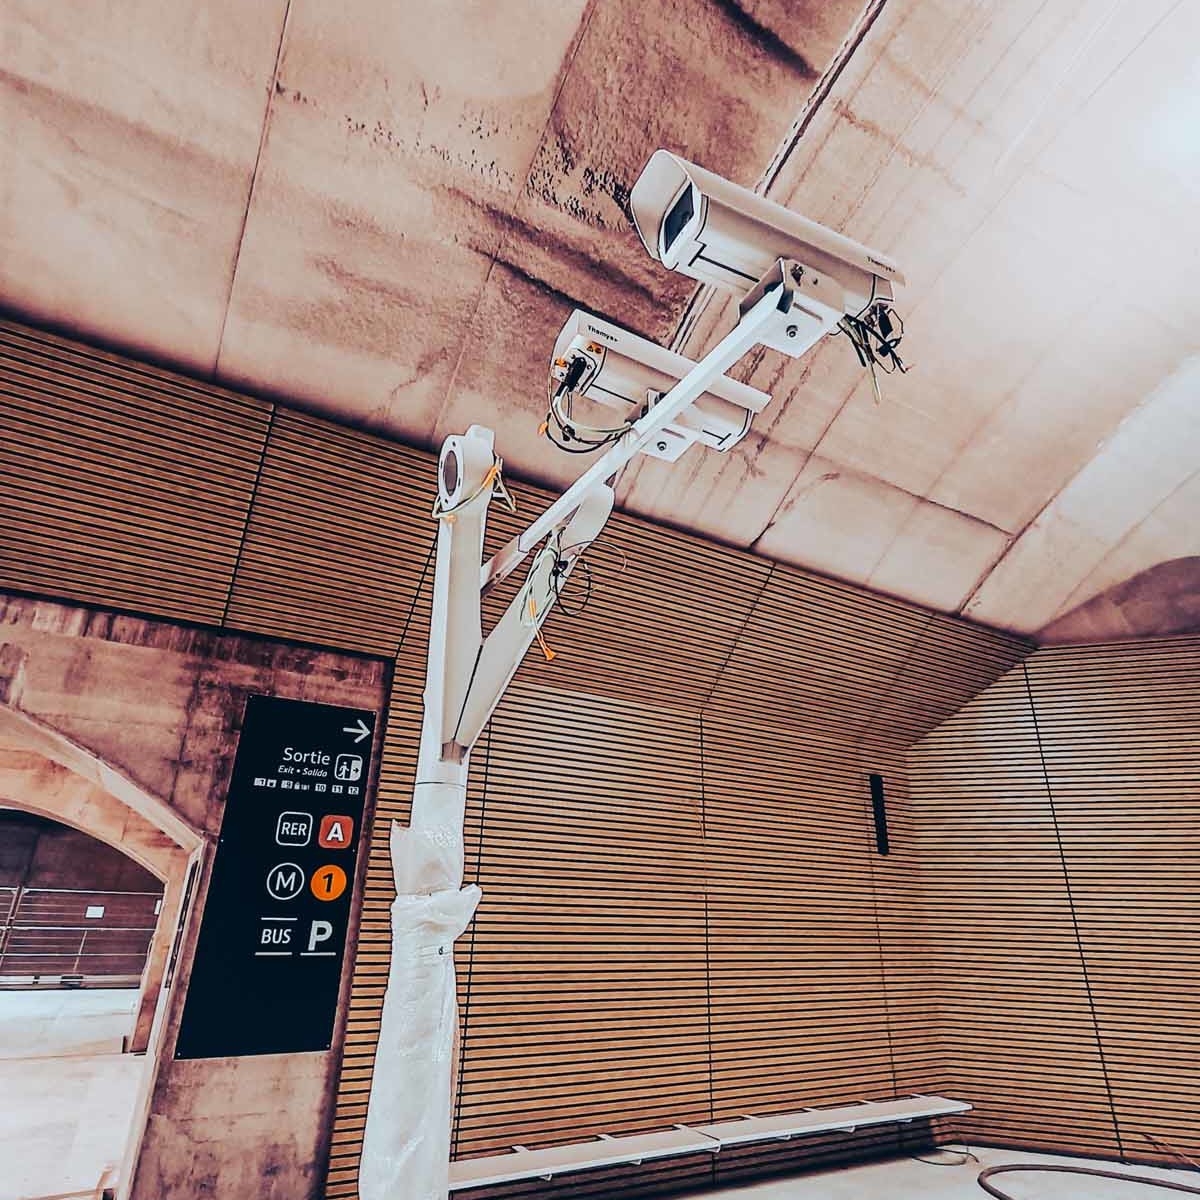 Quai gare SNCF vidéo surveillance